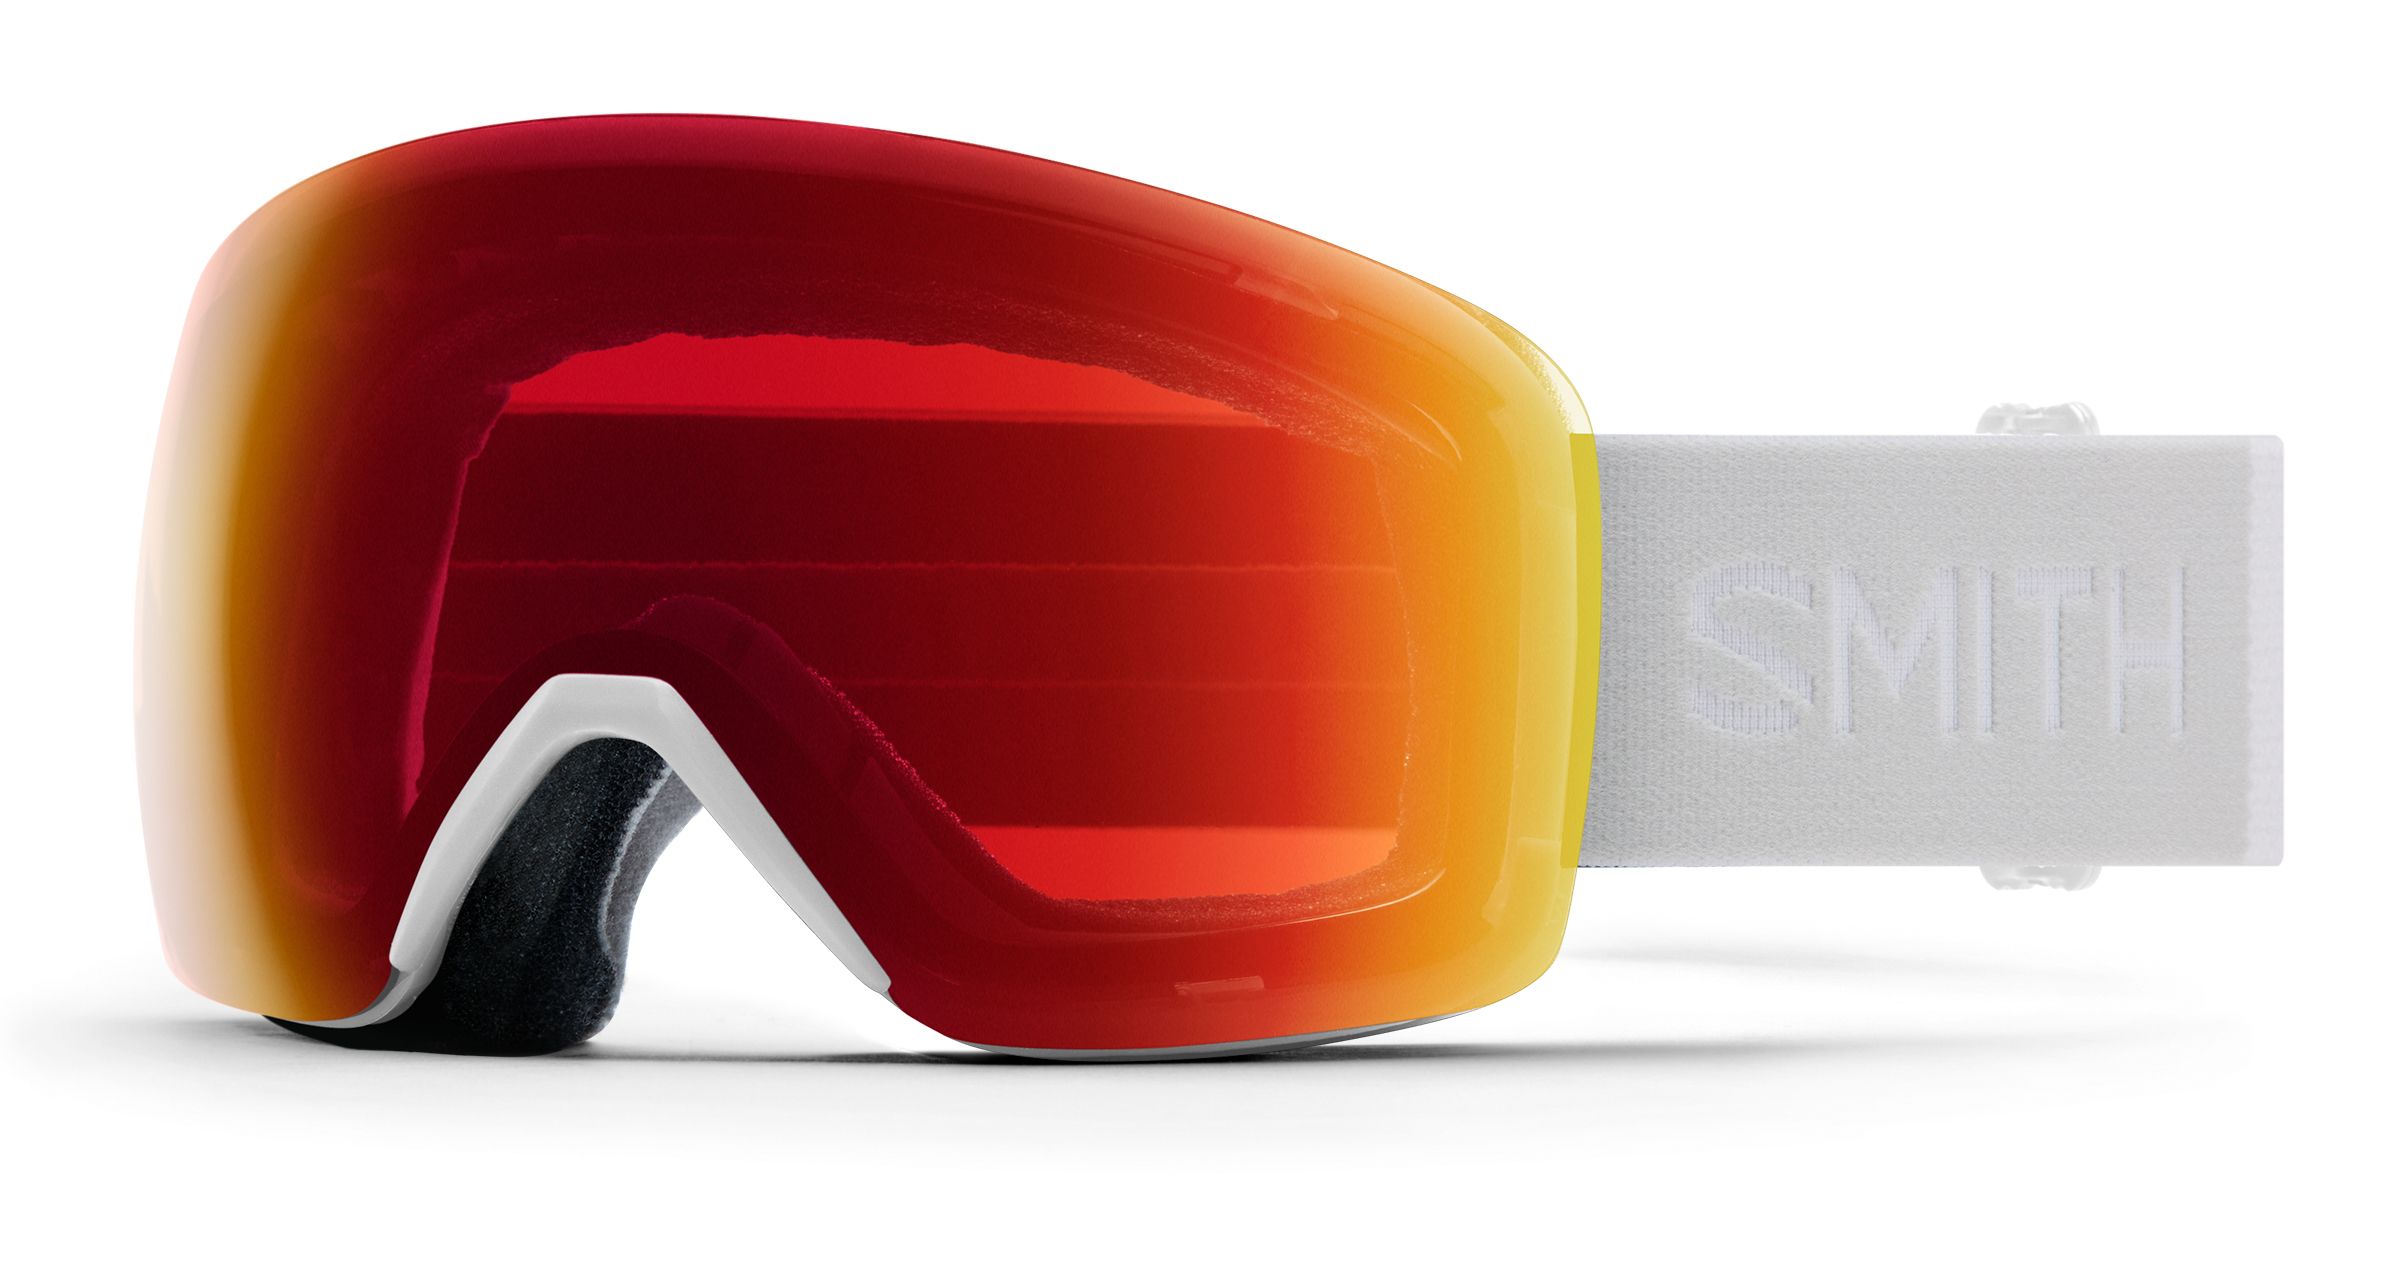 Masque de Ski Skyline - White Vapor - Chromapop Photocromic Red Mirror